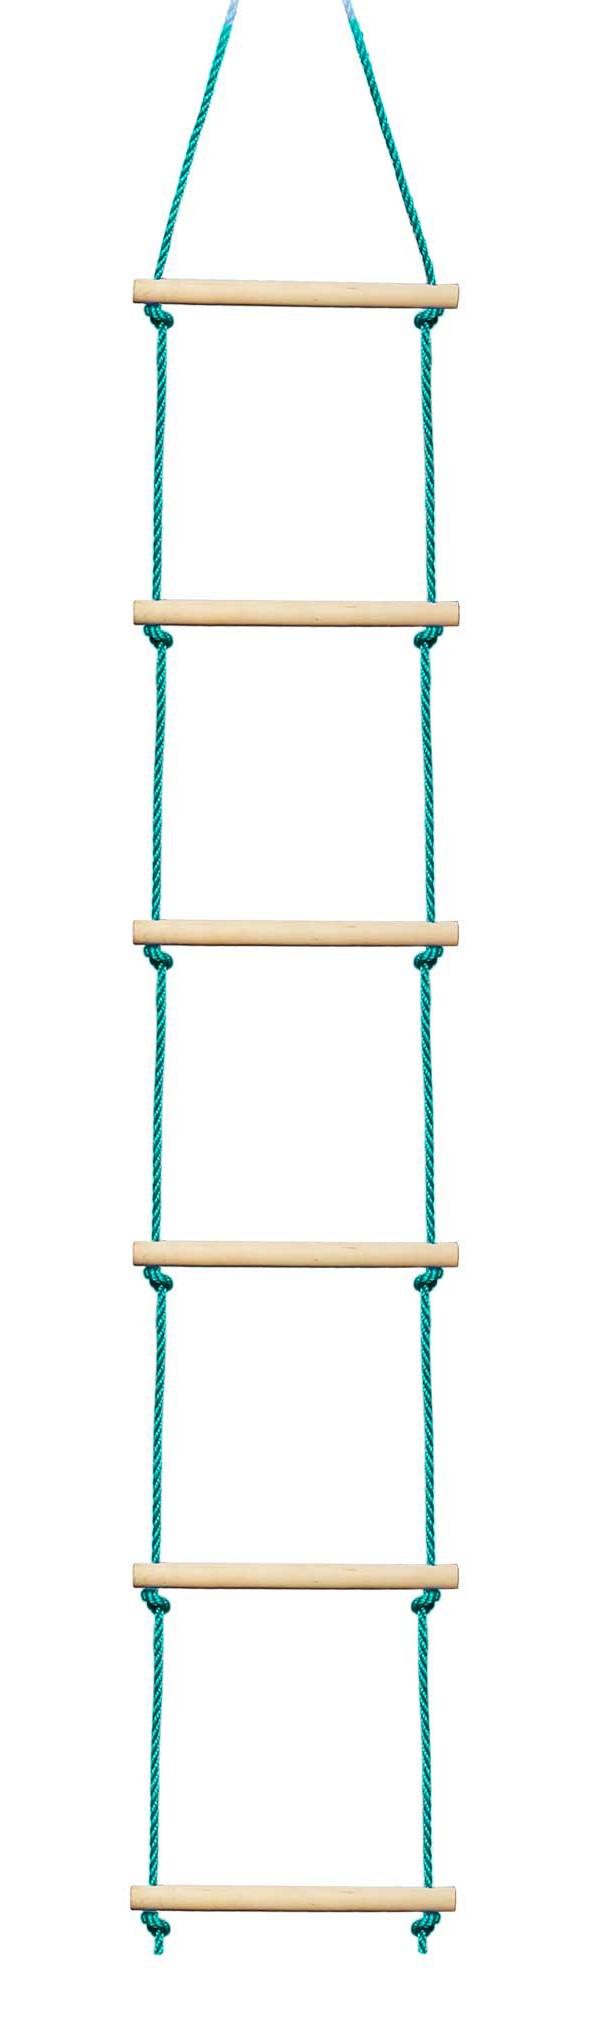 Slackers Ninja 8' Ladder Obstacle product image